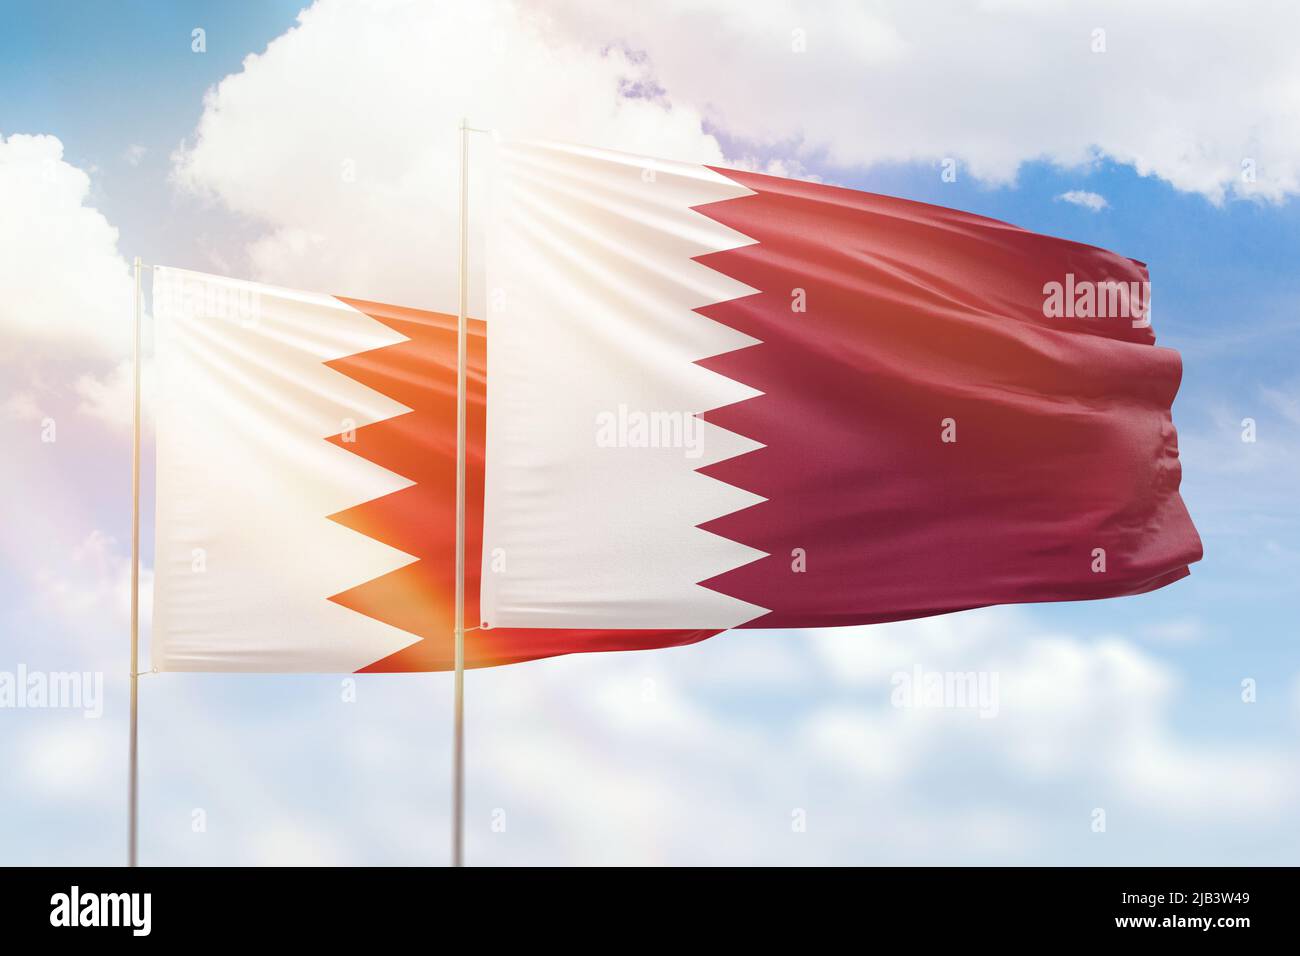 Sunny blue sky and flags of qatar and bahrain Stock Photo